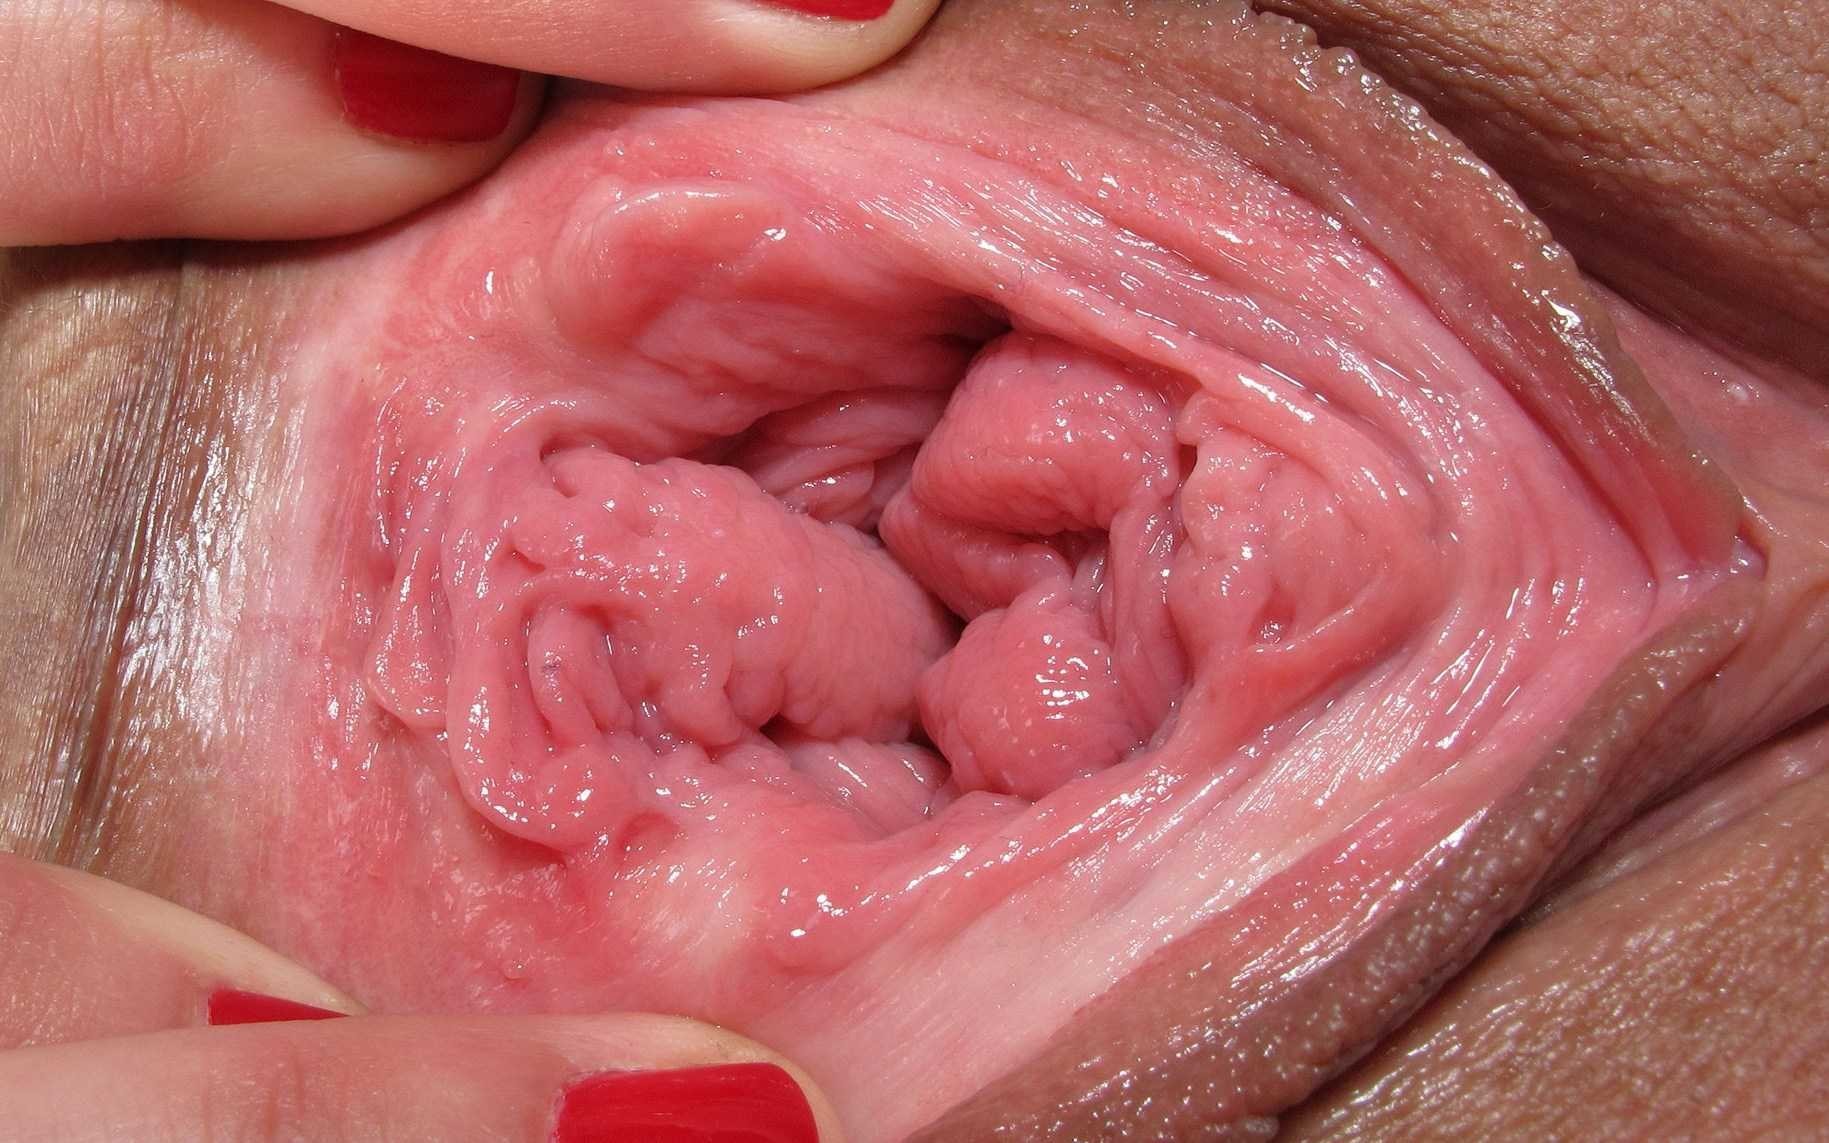 Inside the vagina photos - 🧡 File:Inside vagina.JPG - Wikimedia Commons.